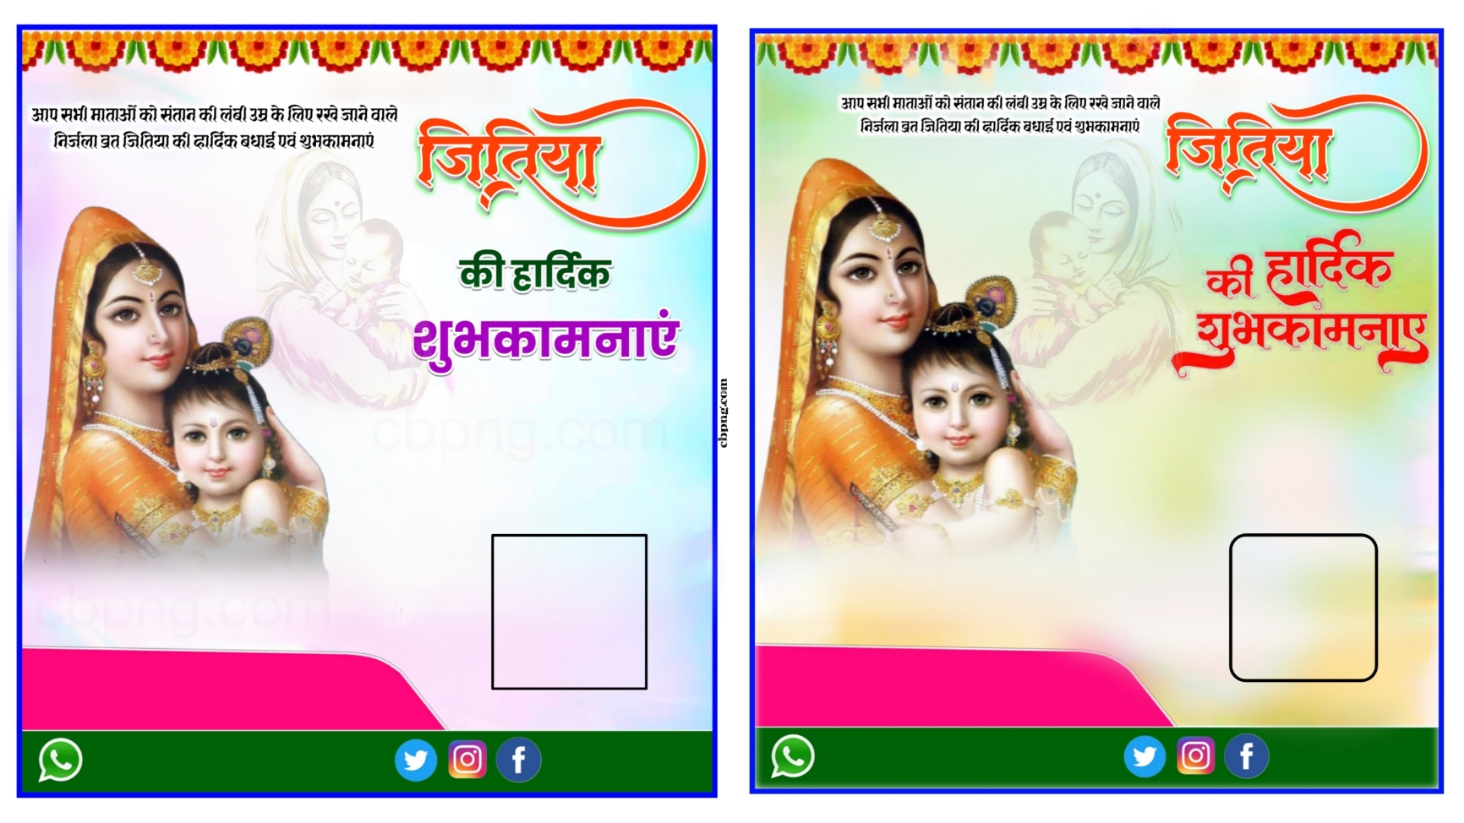 Jitiya banner editing Background Mobile Se Poster kaise banaye